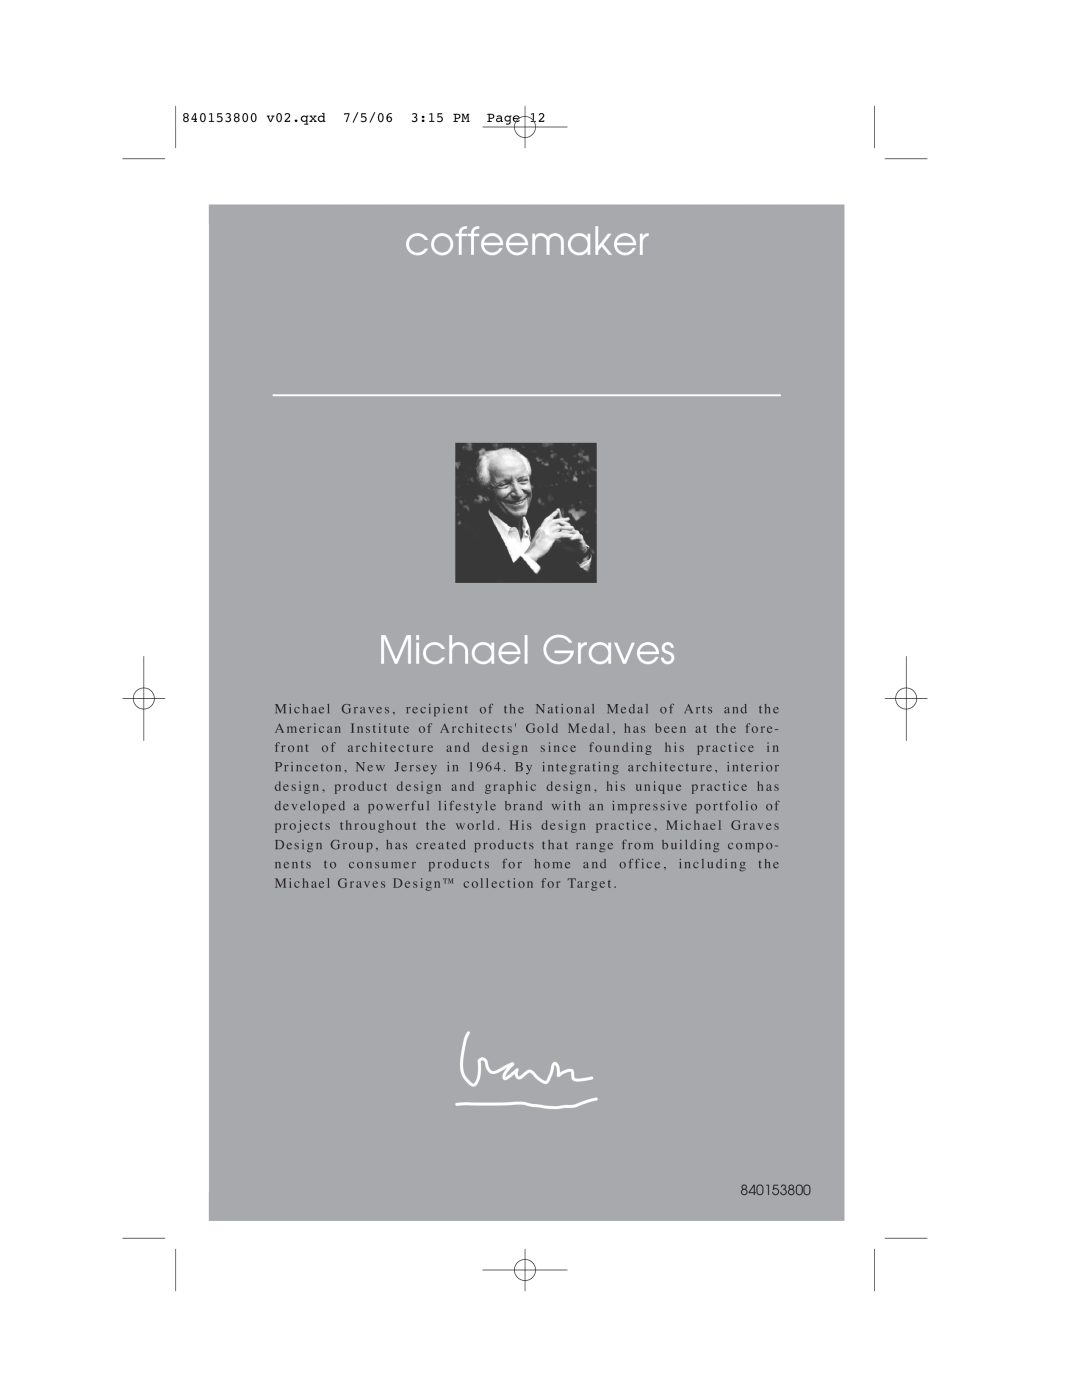 Hamilton Beach 840153800 owner manual coffeemaker Michael Graves 